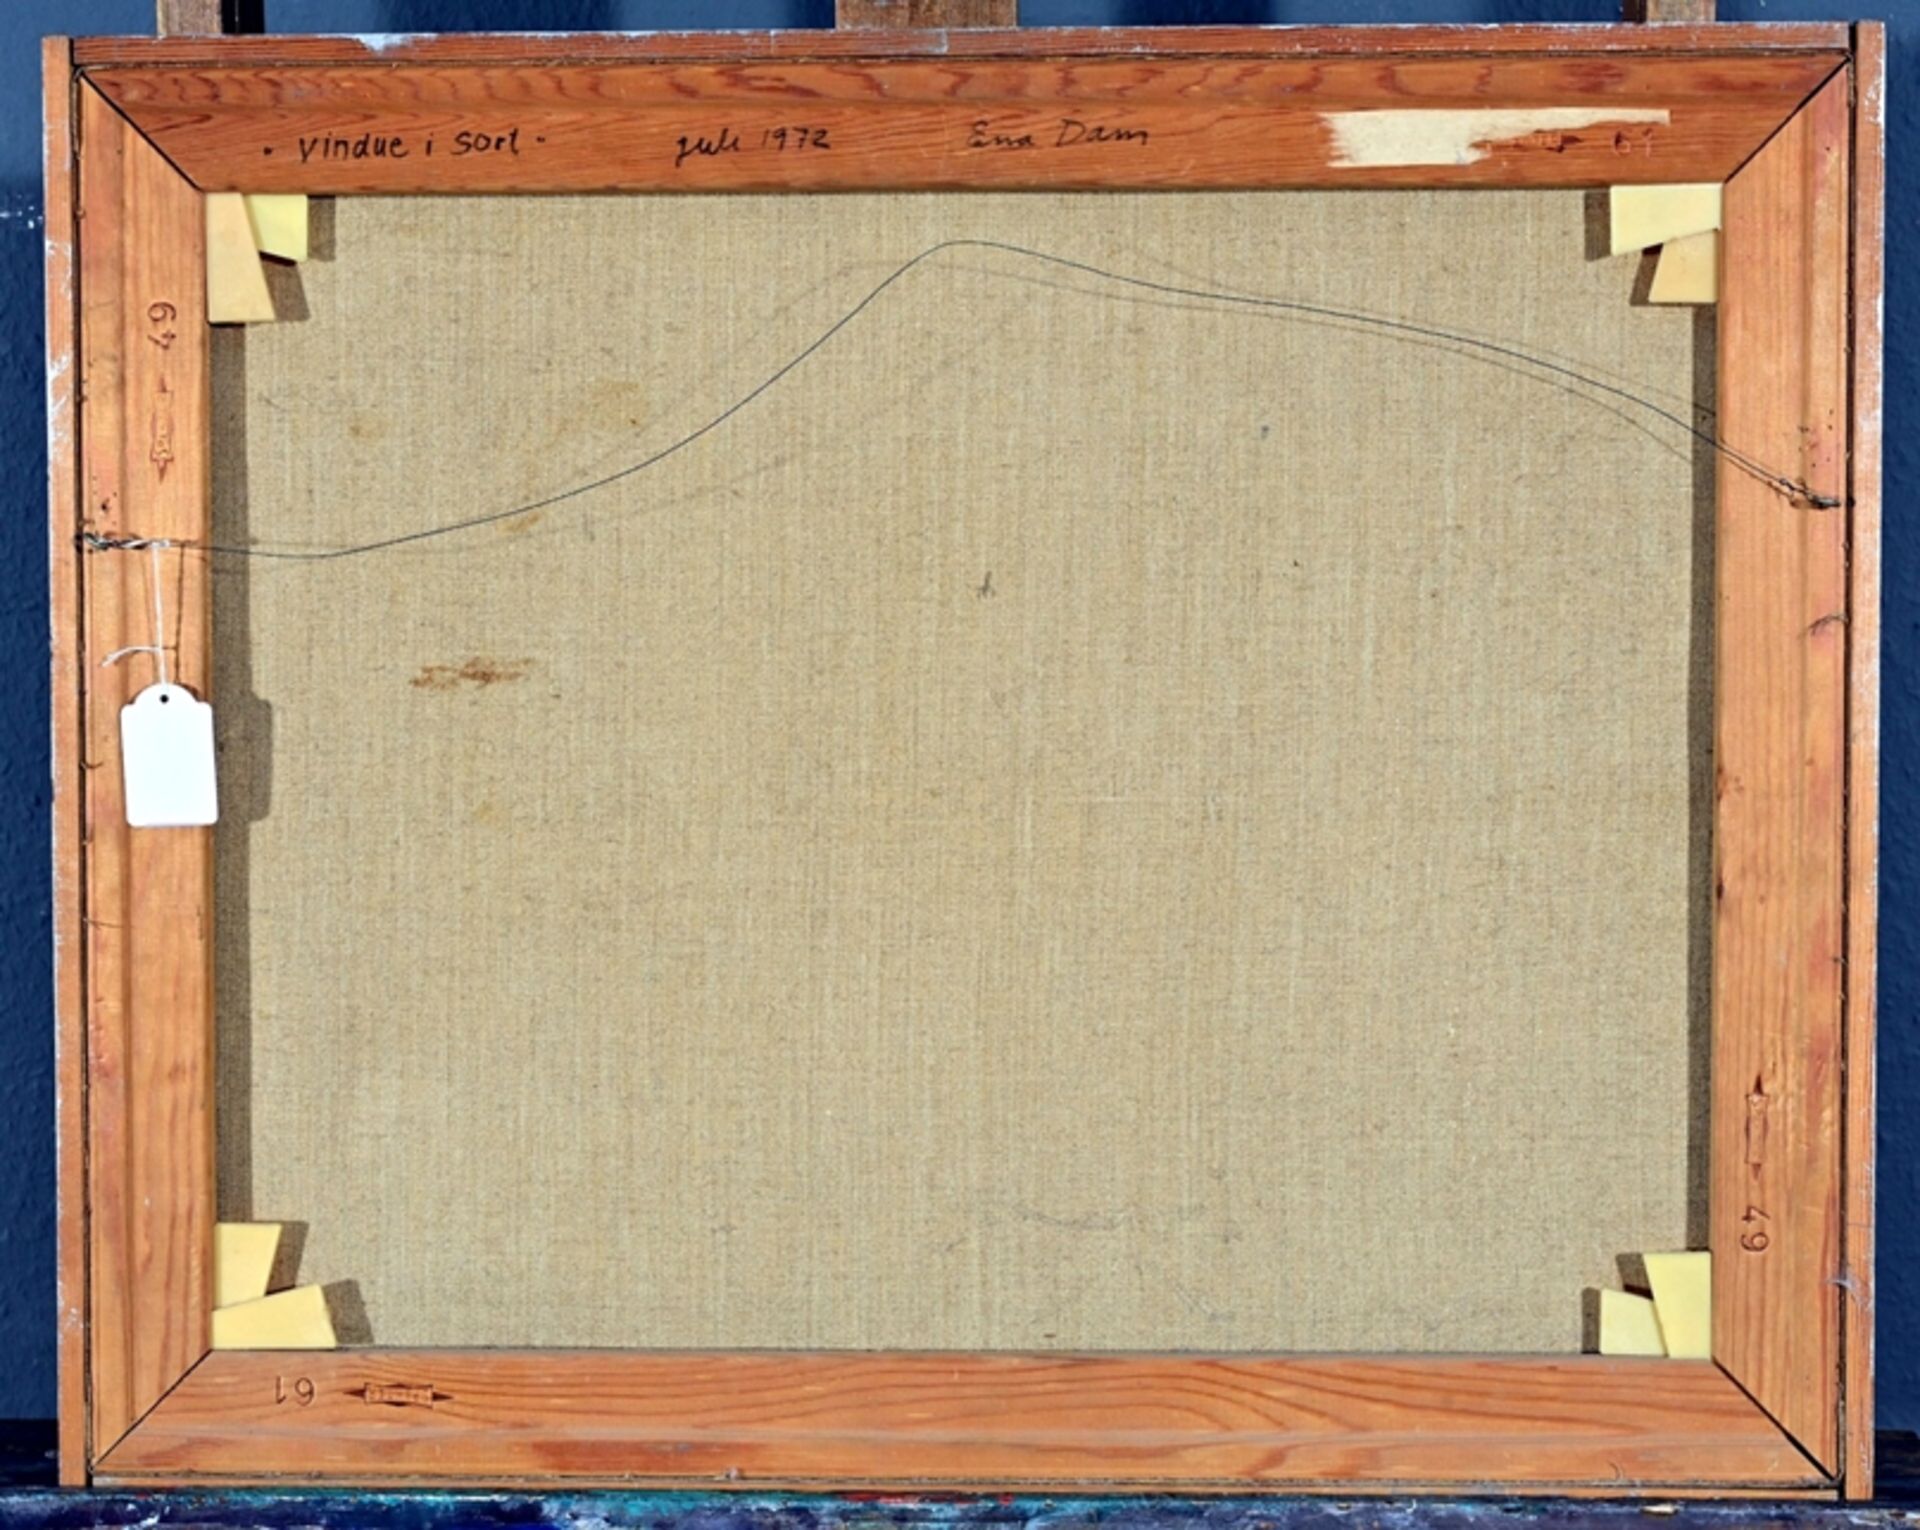 "VINDUE I SORT" - Gemälde, Öl auf Leinwand, ca. 49 x 61 cm, unten rechts Ritzsignatur: "ENA DAM" =  - Bild 3 aus 3